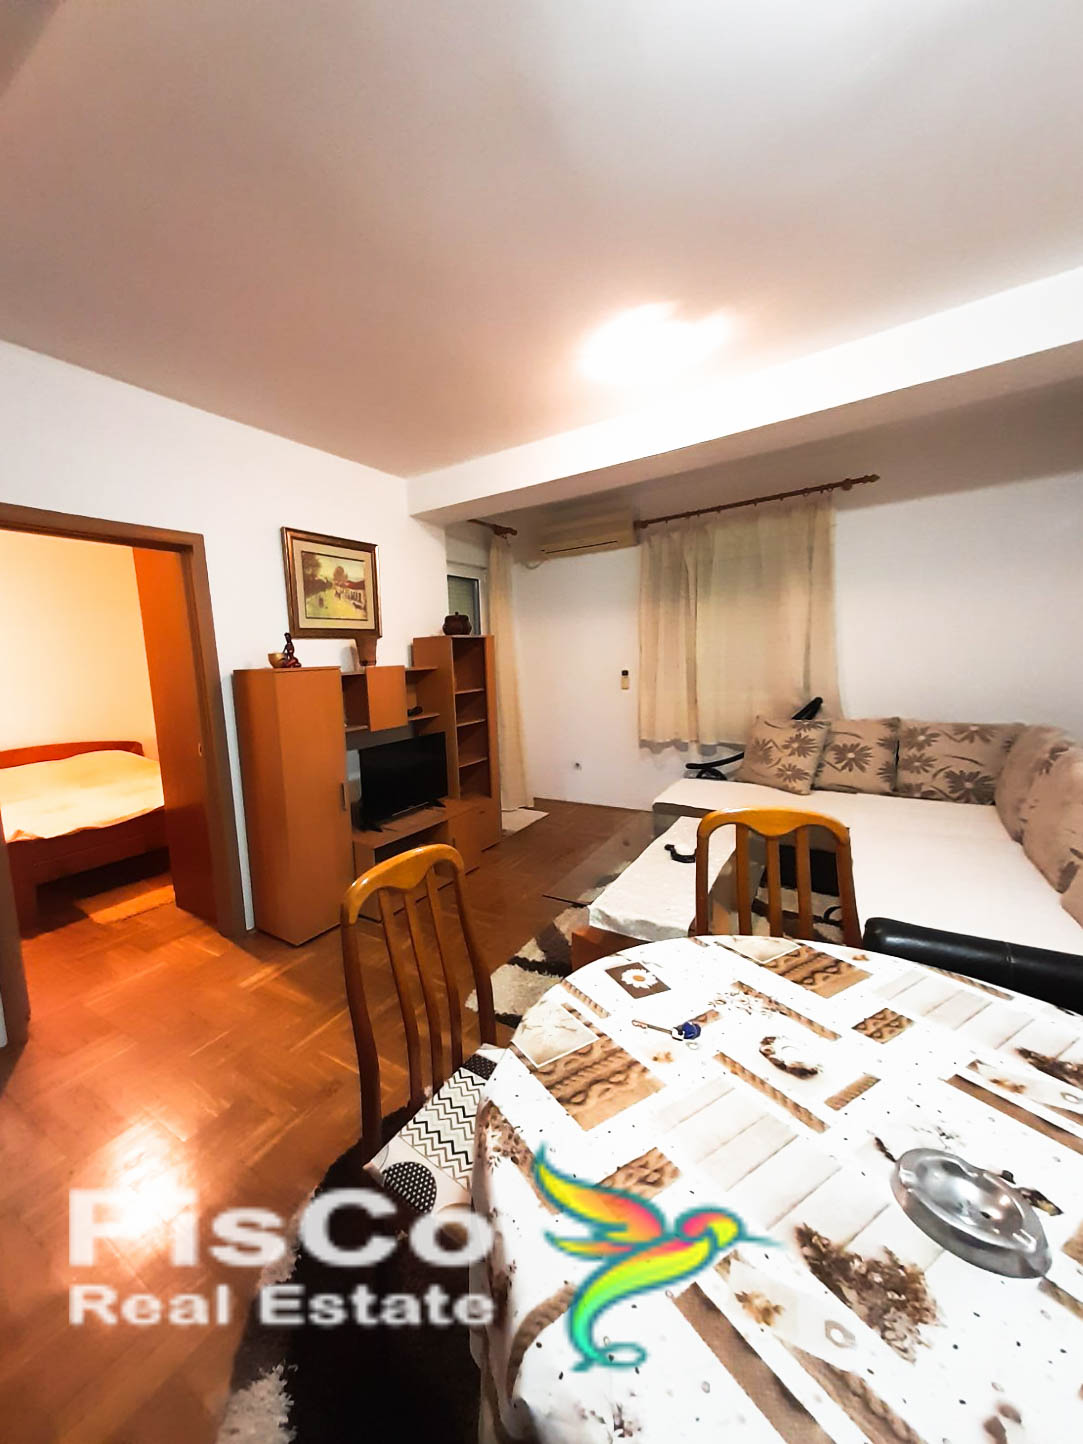 One bedroom apartment for rent in Kralja Nikola Street 45m2